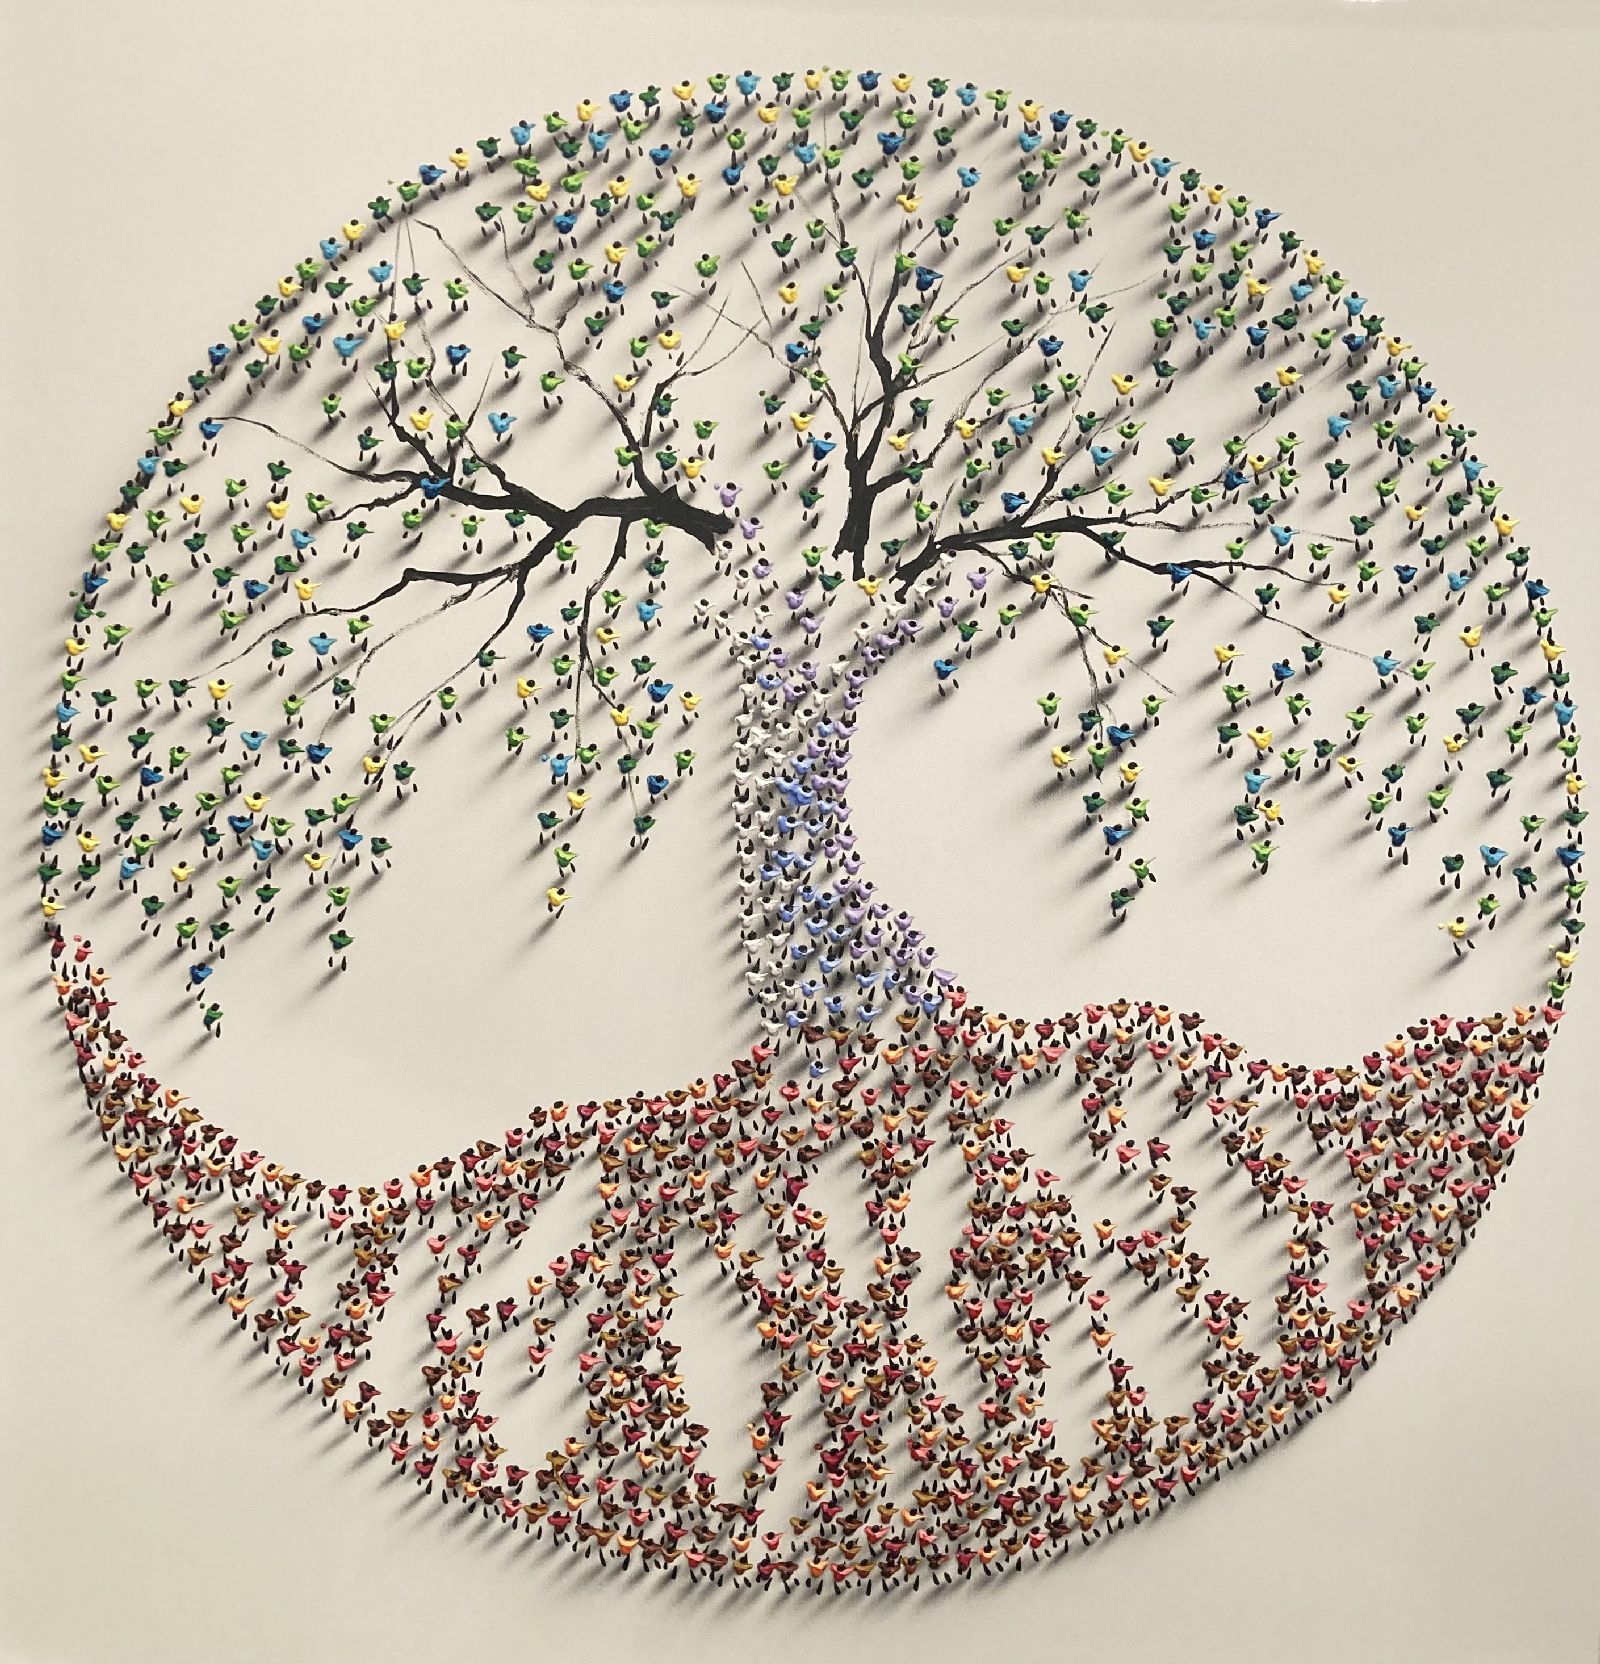 Tree of life by Francisco Bartus